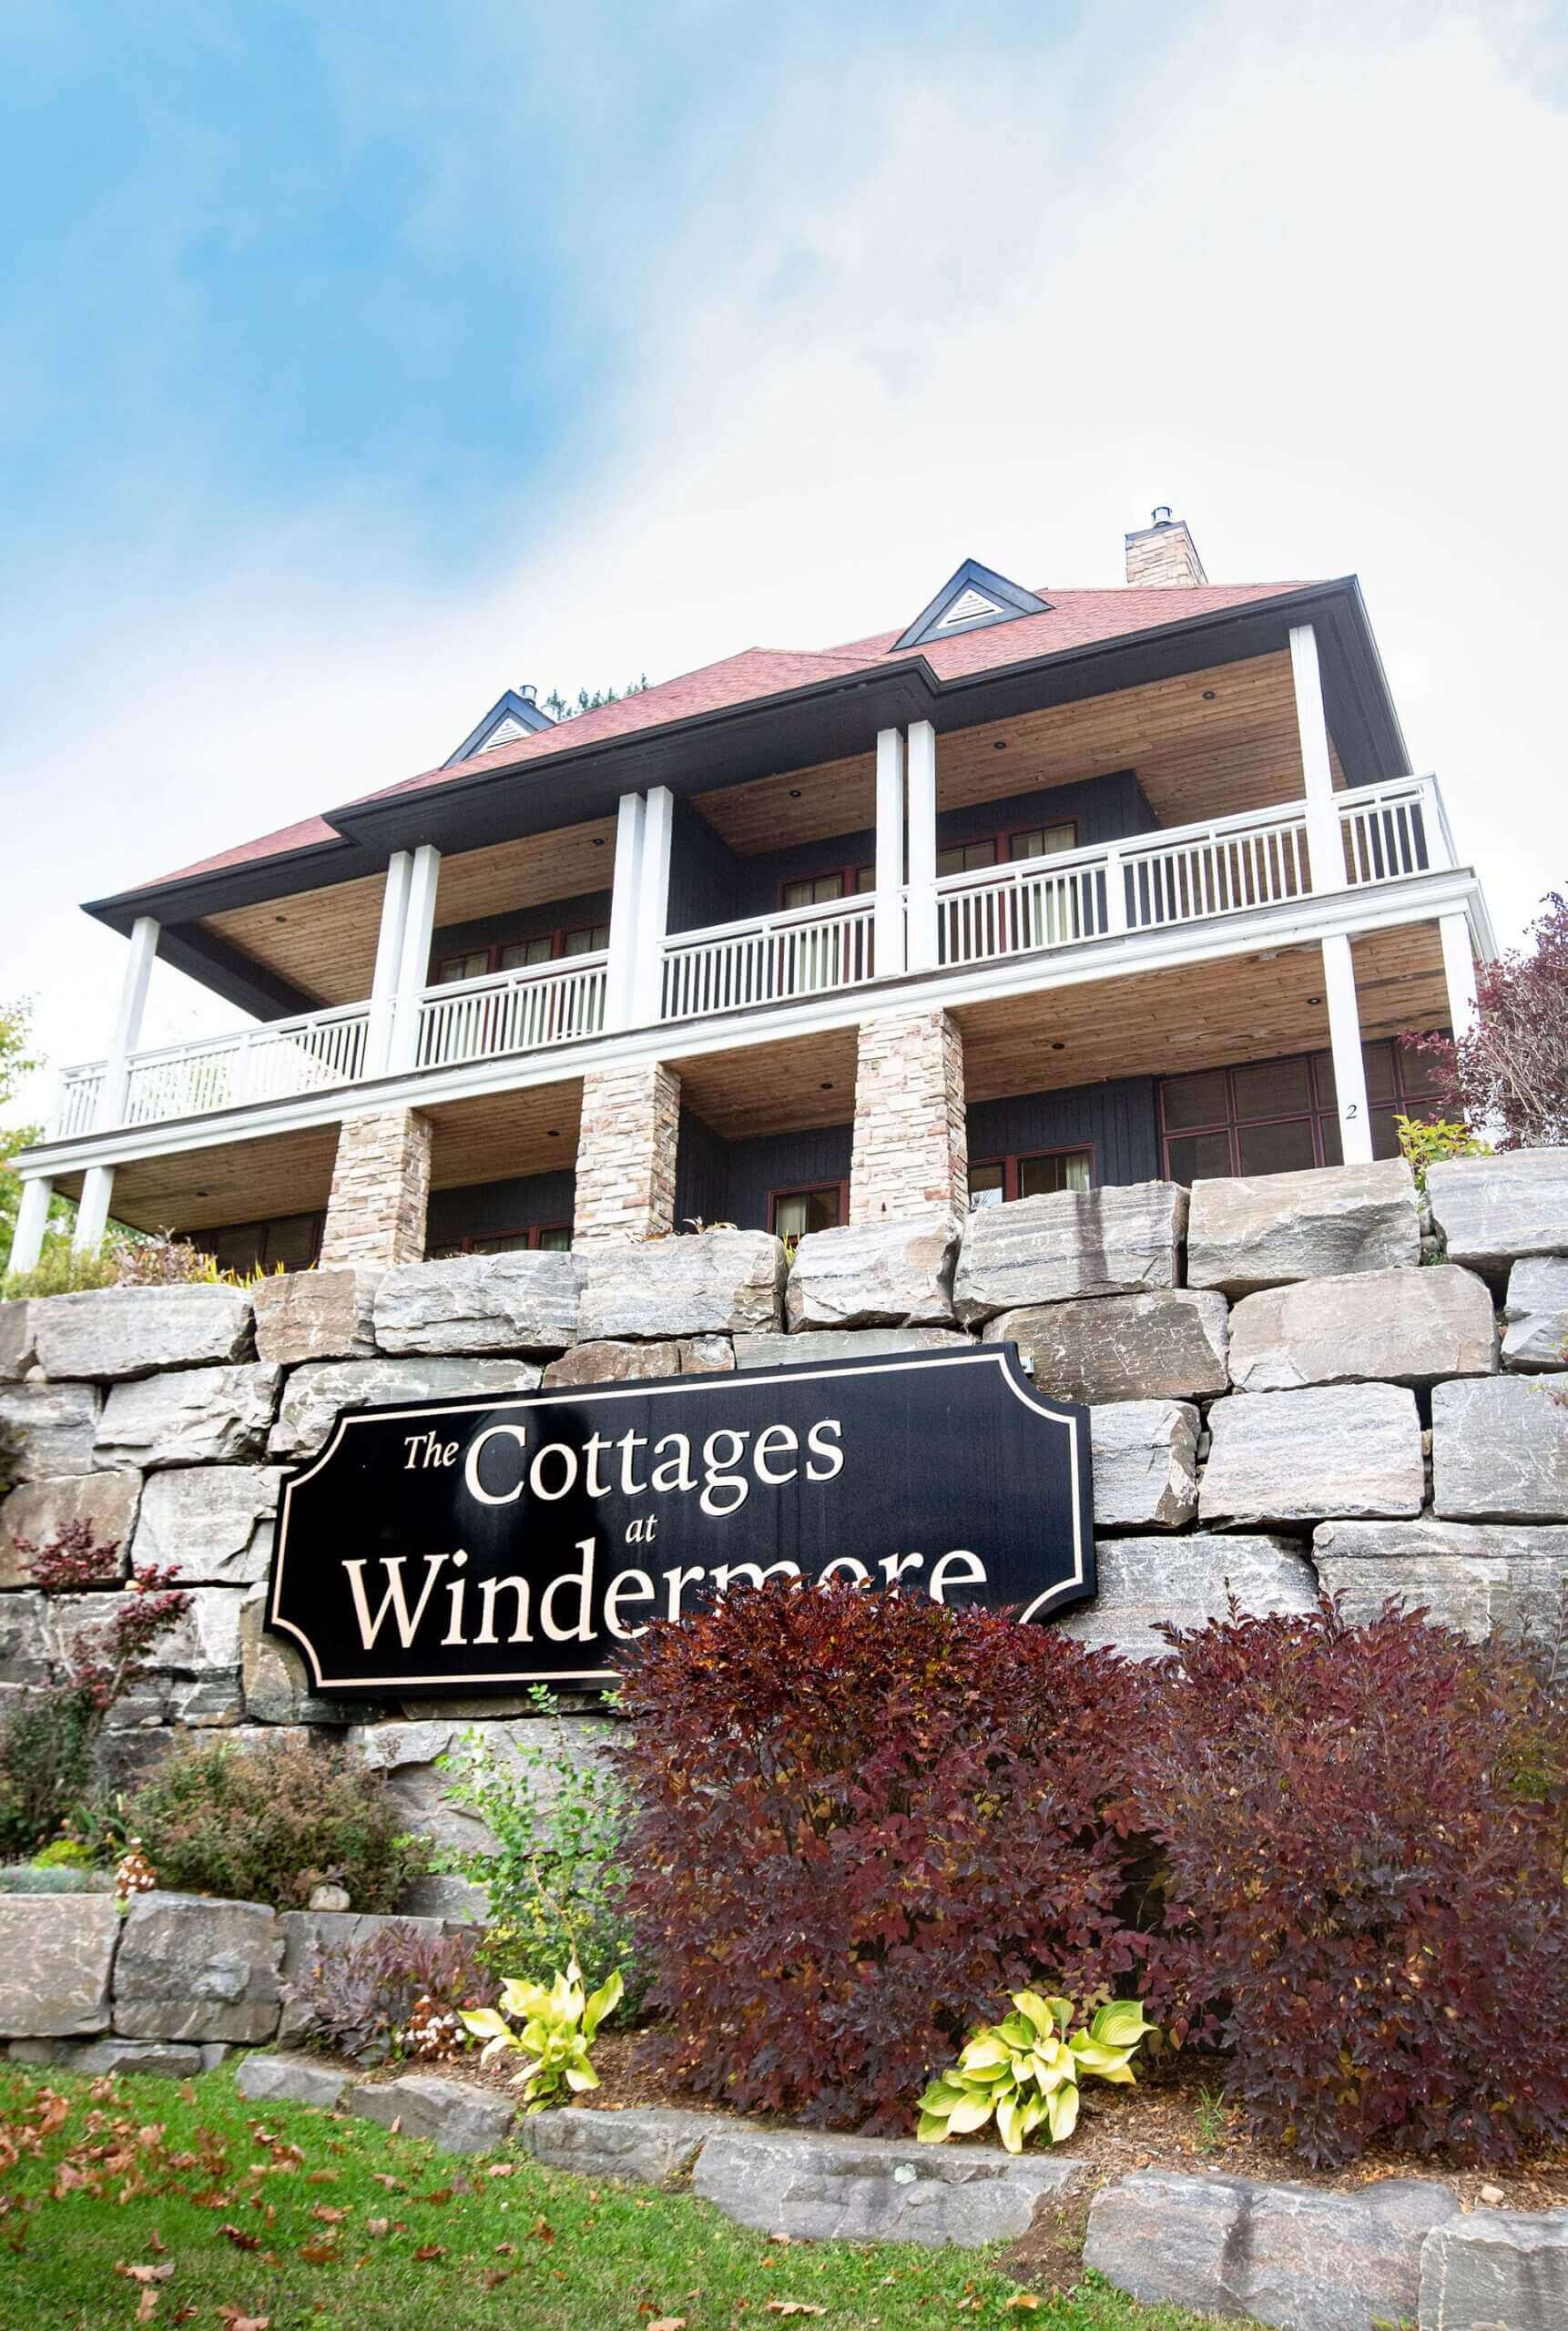 Windermere Cottages